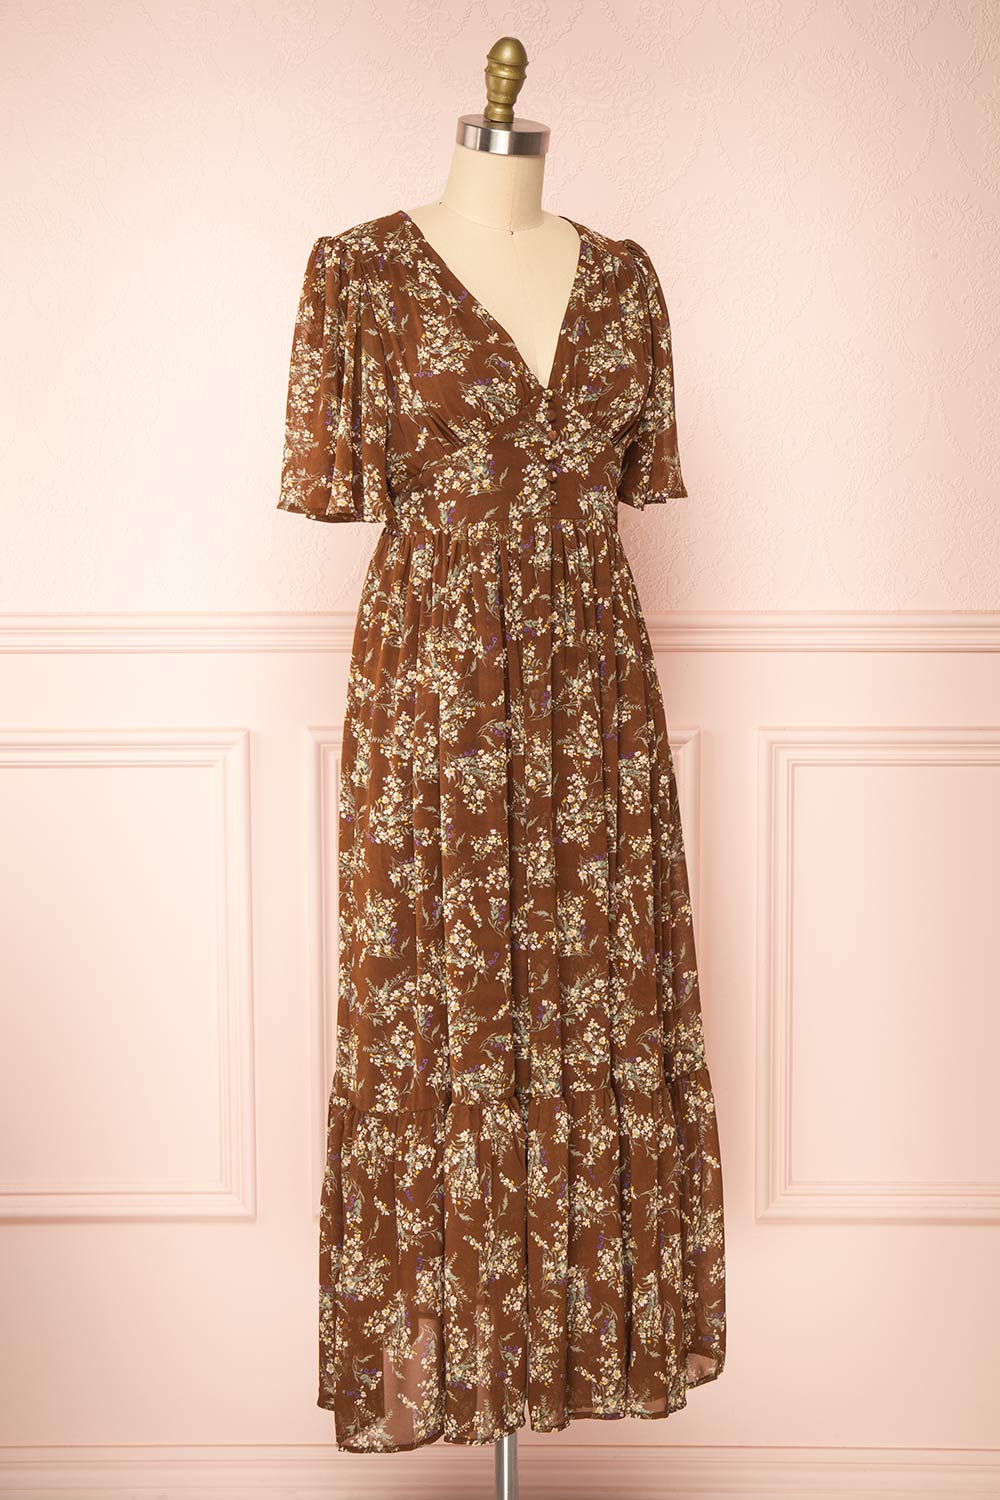 Britt Mocha | Floral Midi Dress w/ Short Sleeves | Boutique 1861 side view